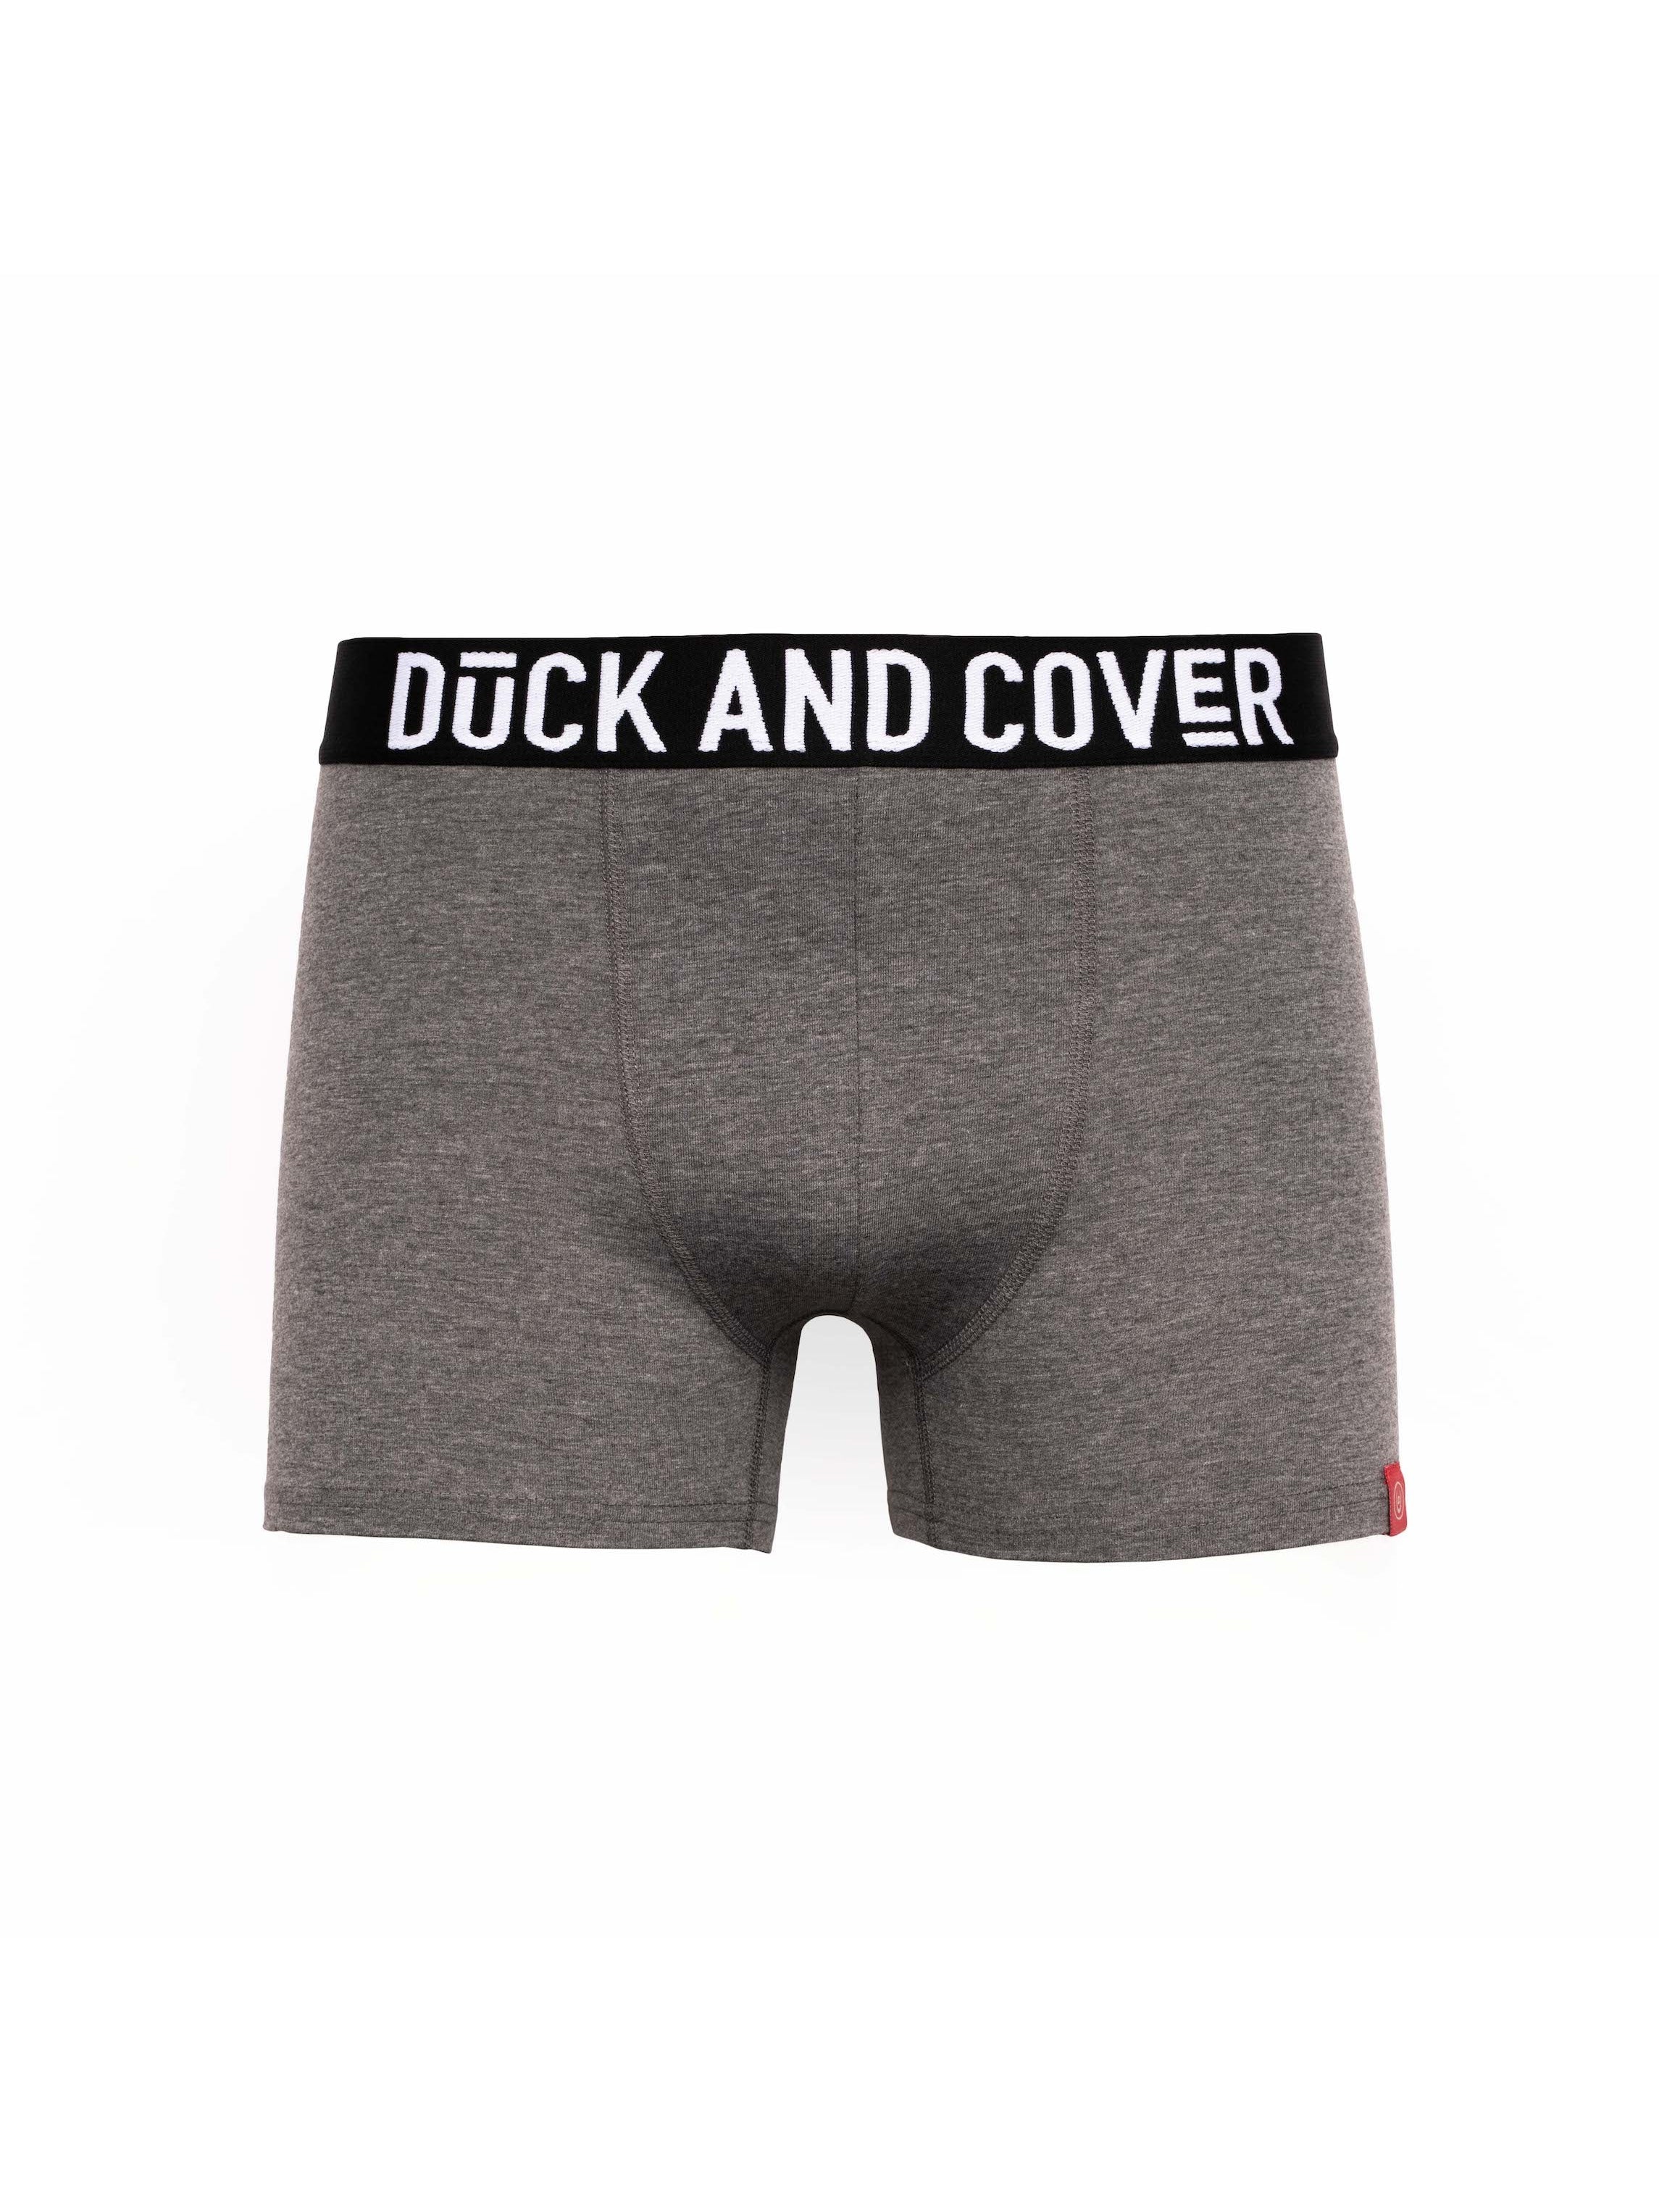 Mens Darton Boxers 2pk Grey Marl – Duck and Cover